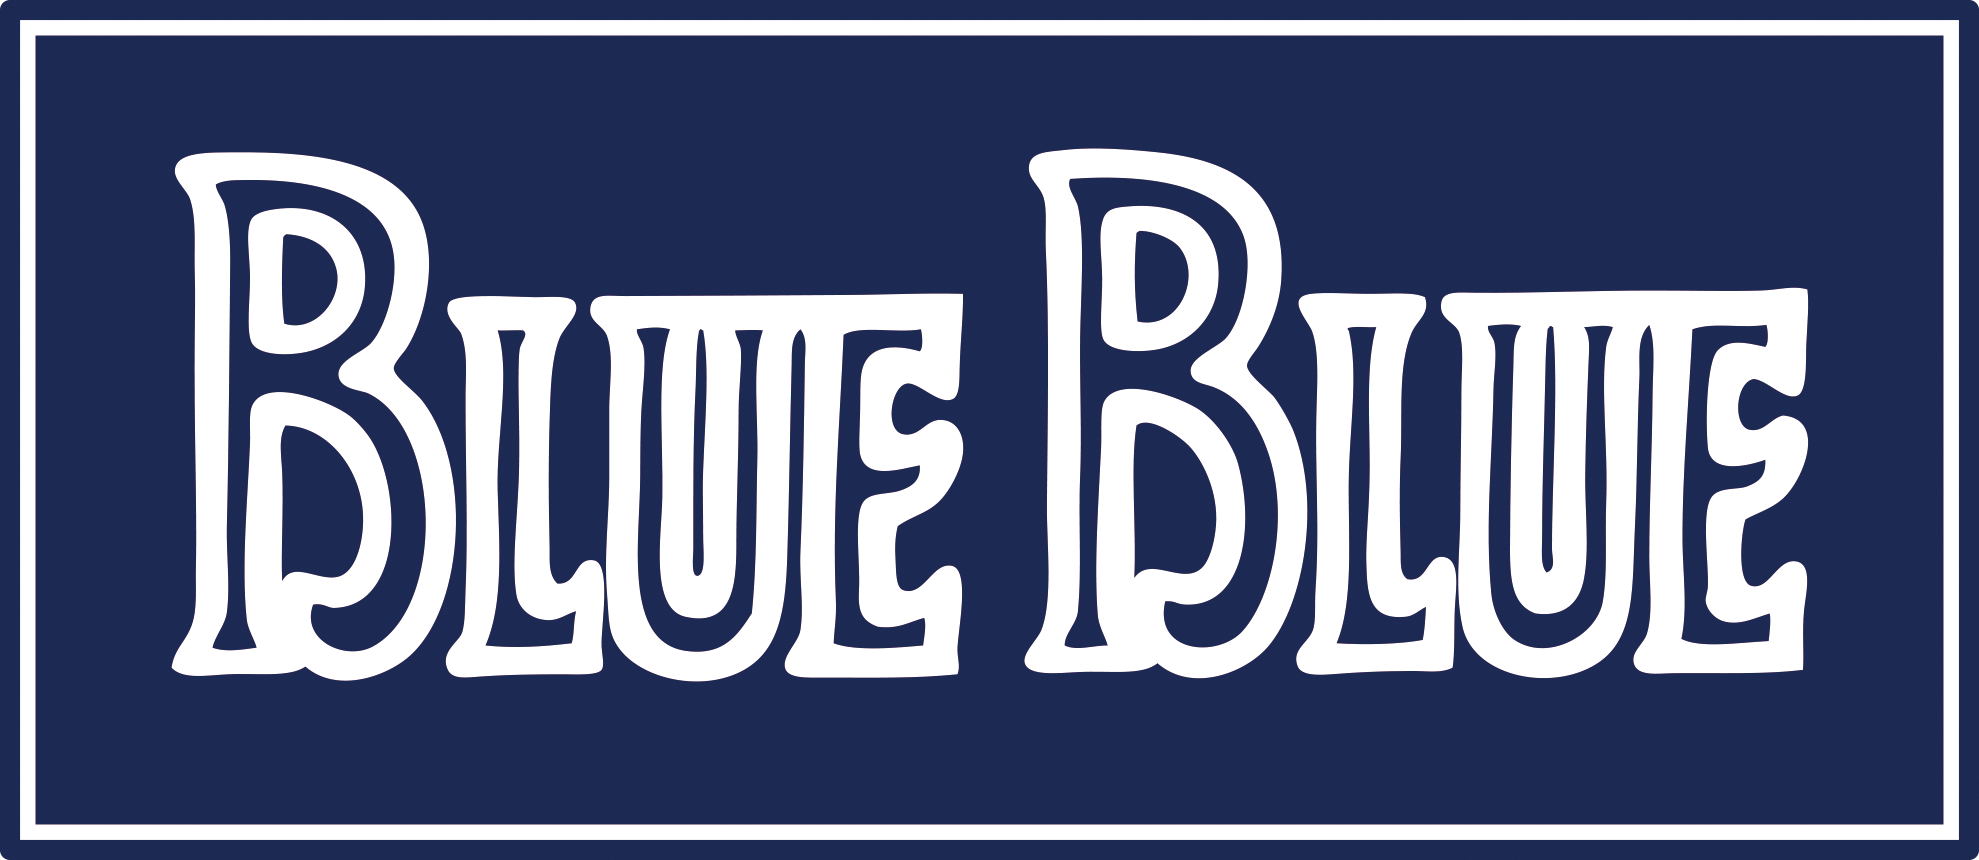 BLUE BLUE